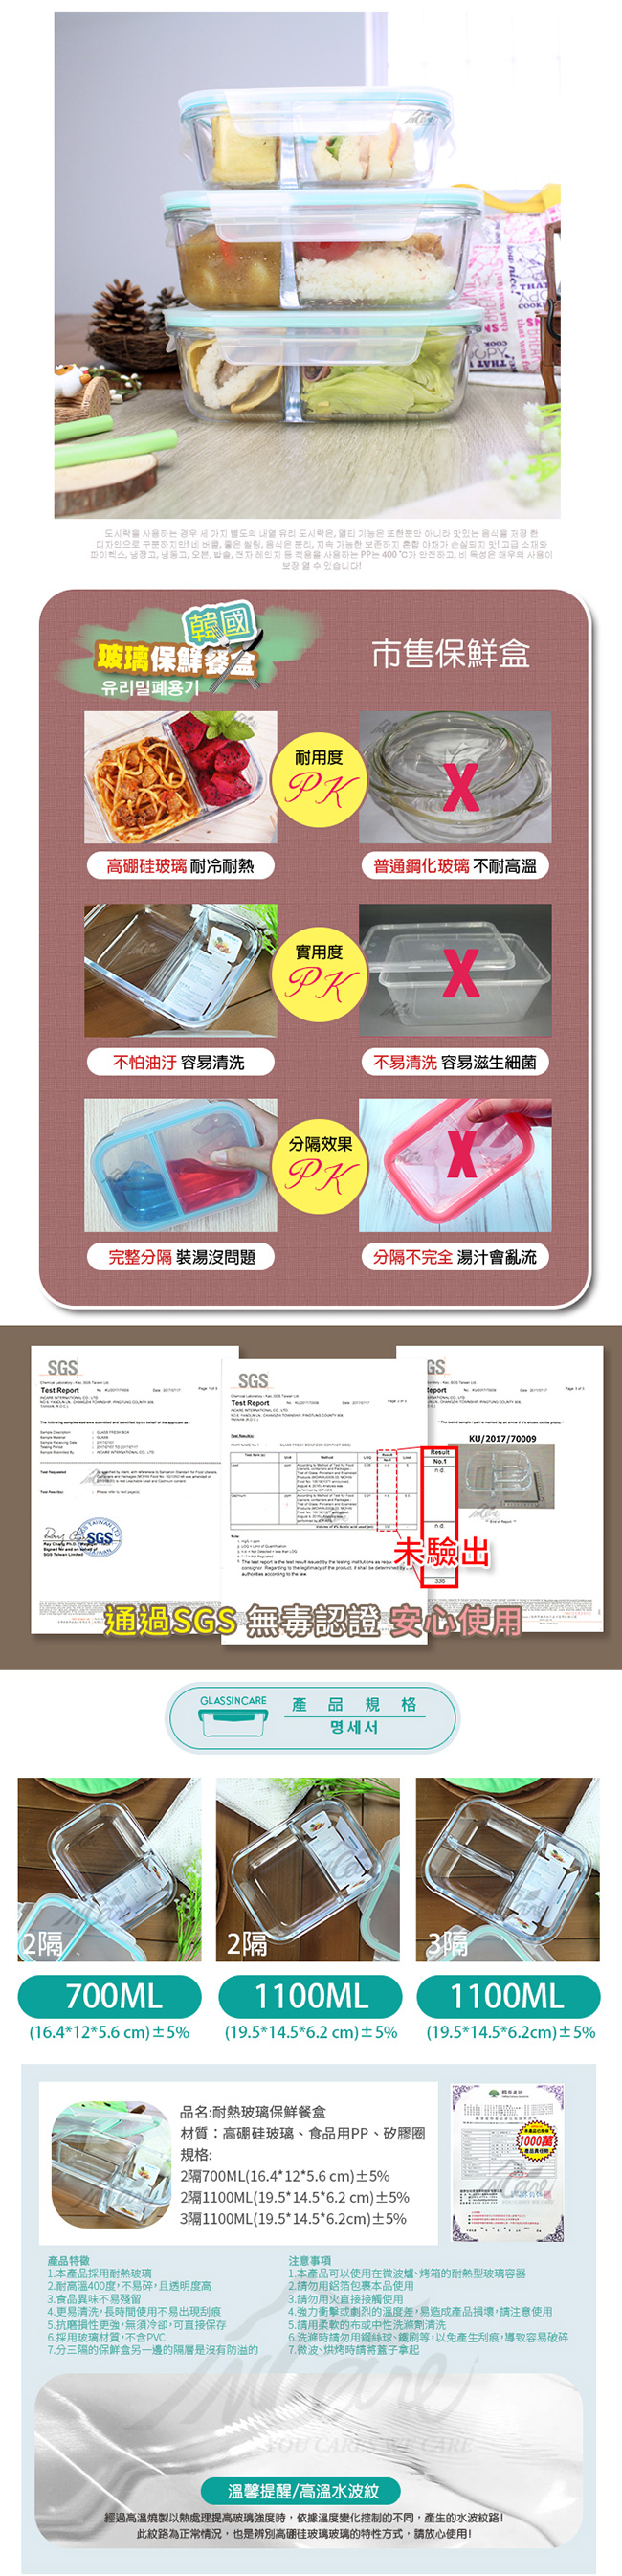 Incare 熱銷韓國強化玻璃分隔保鮮盒(1100ml2隔/2件組)